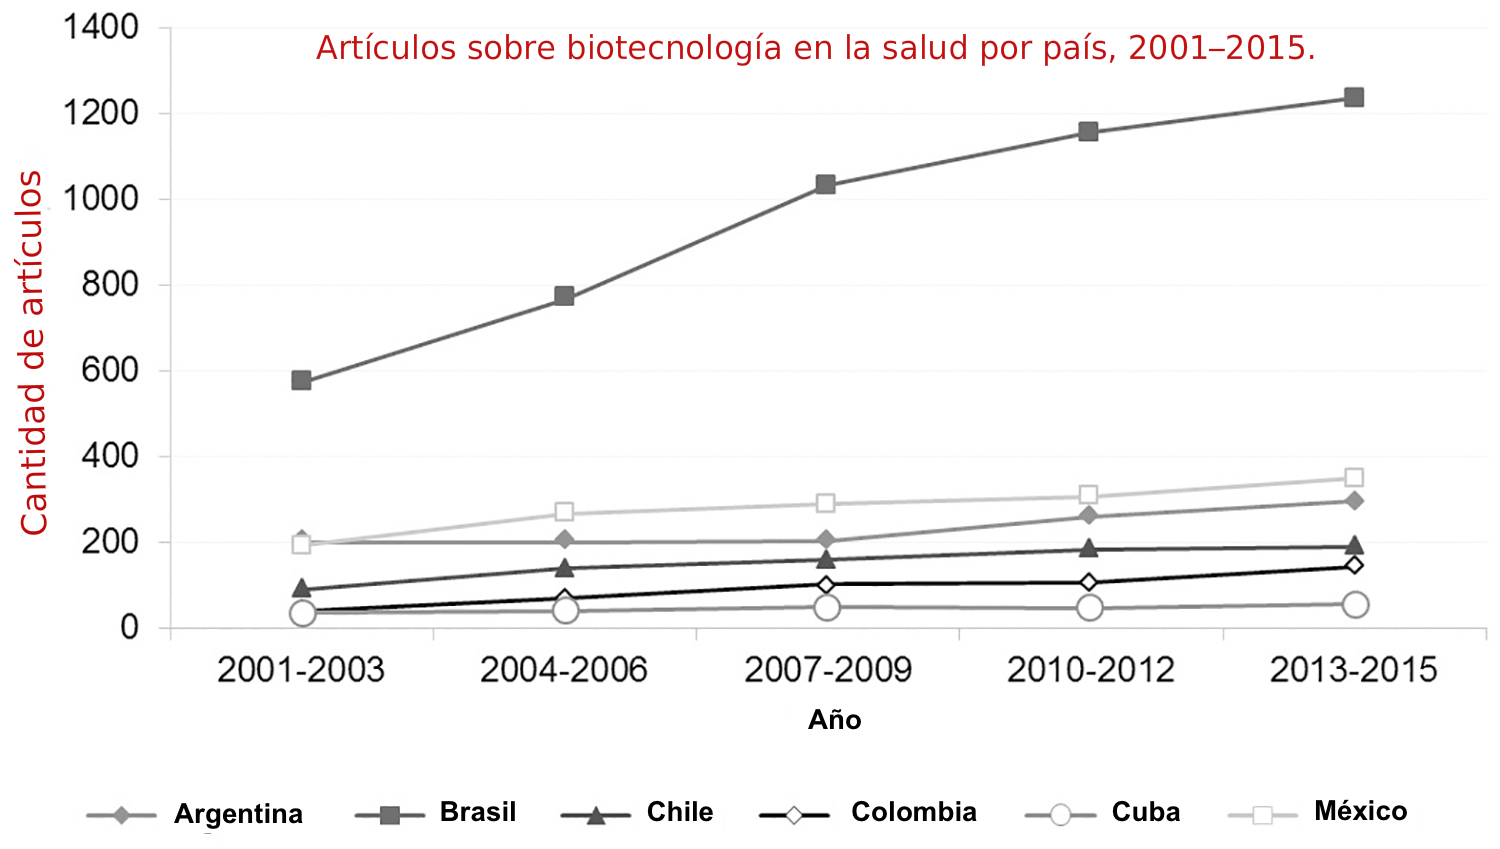 Biotec articles by countries, dani